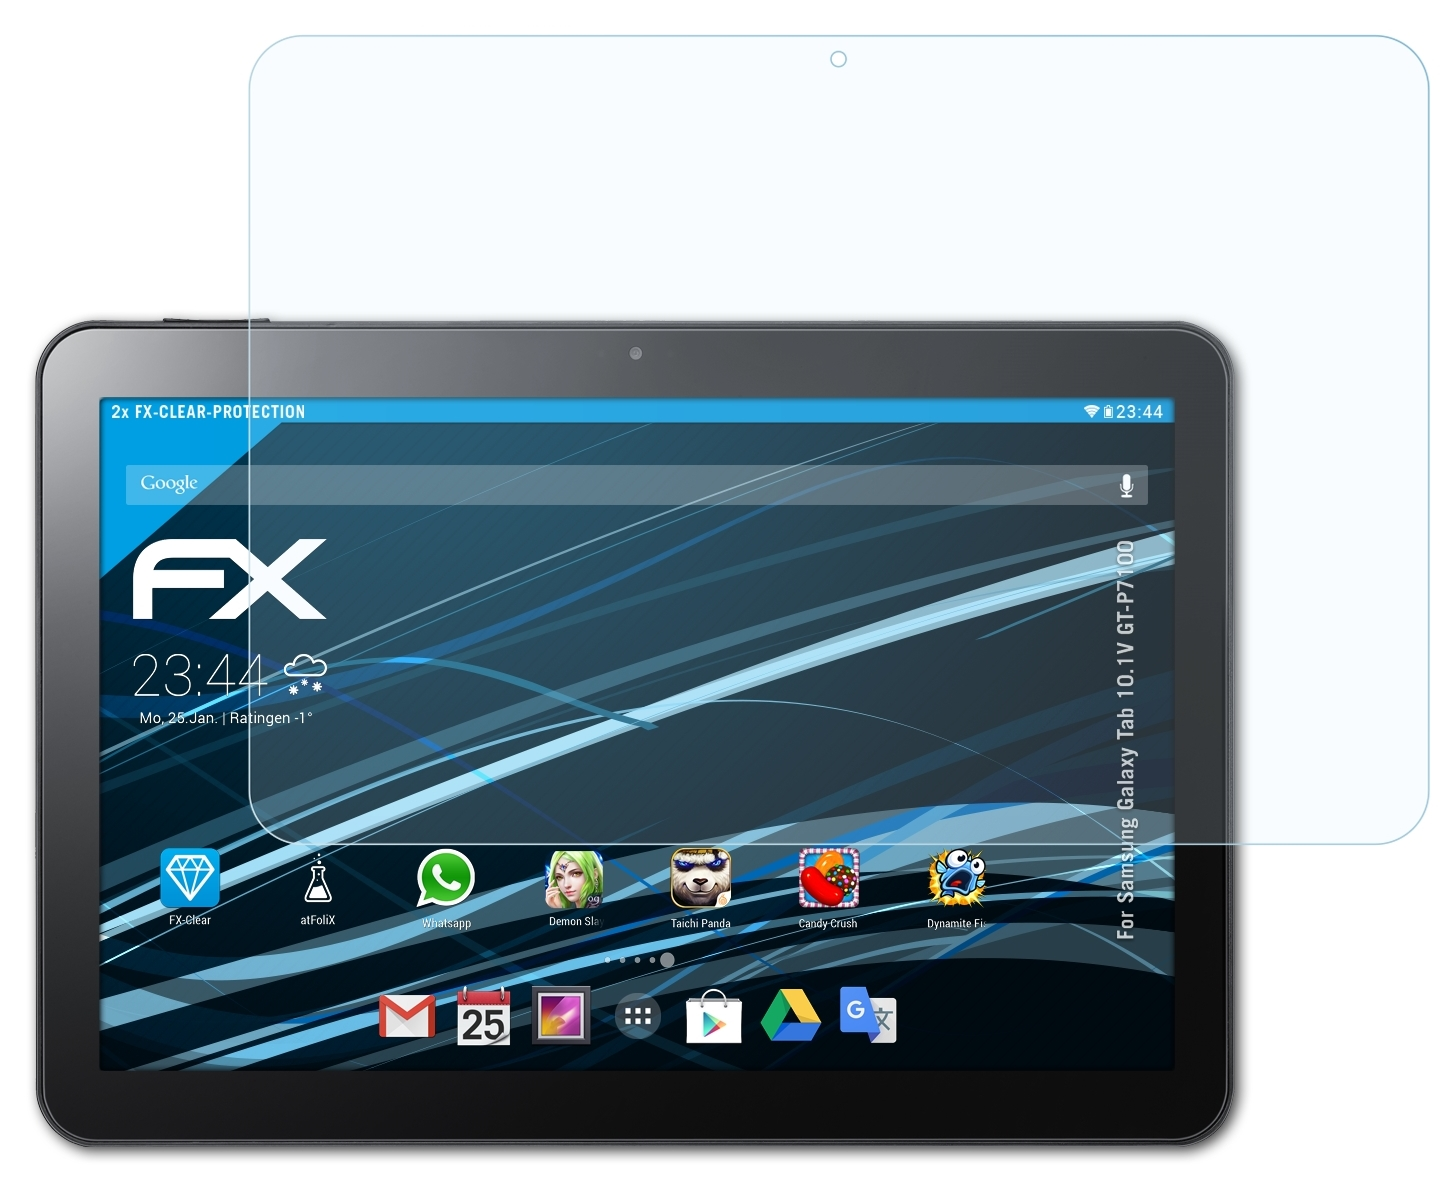 ATFOLIX 2x FX-Clear Tab (GT-P7100)) Displayschutz(für Samsung Galaxy 10.1V